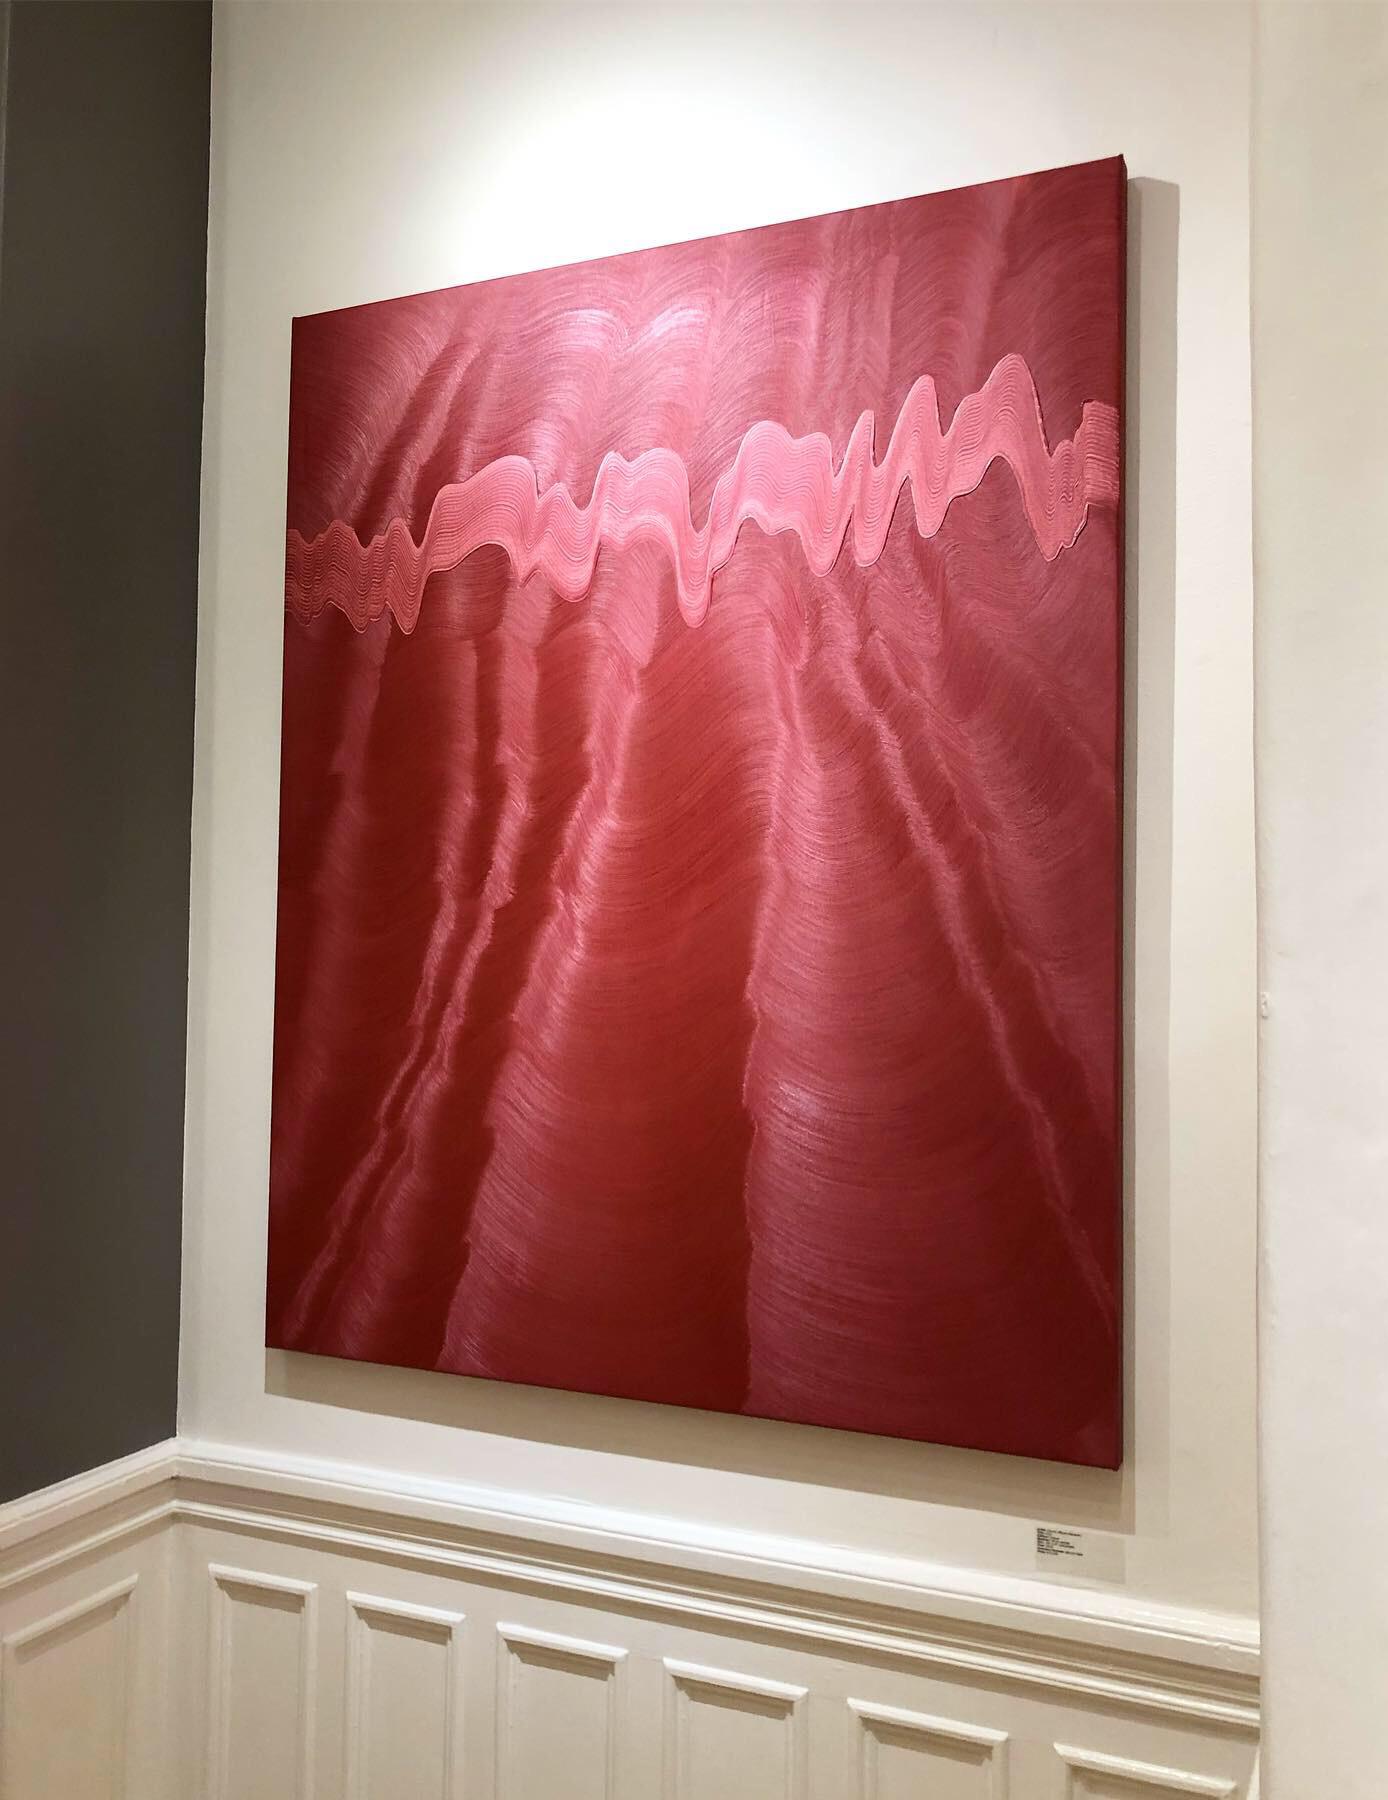 Artist:  Osuna, Miguel
Title:  Rojo
Date:  2018
Medium:  Oil on canvas
Unframed Dimensions:  59